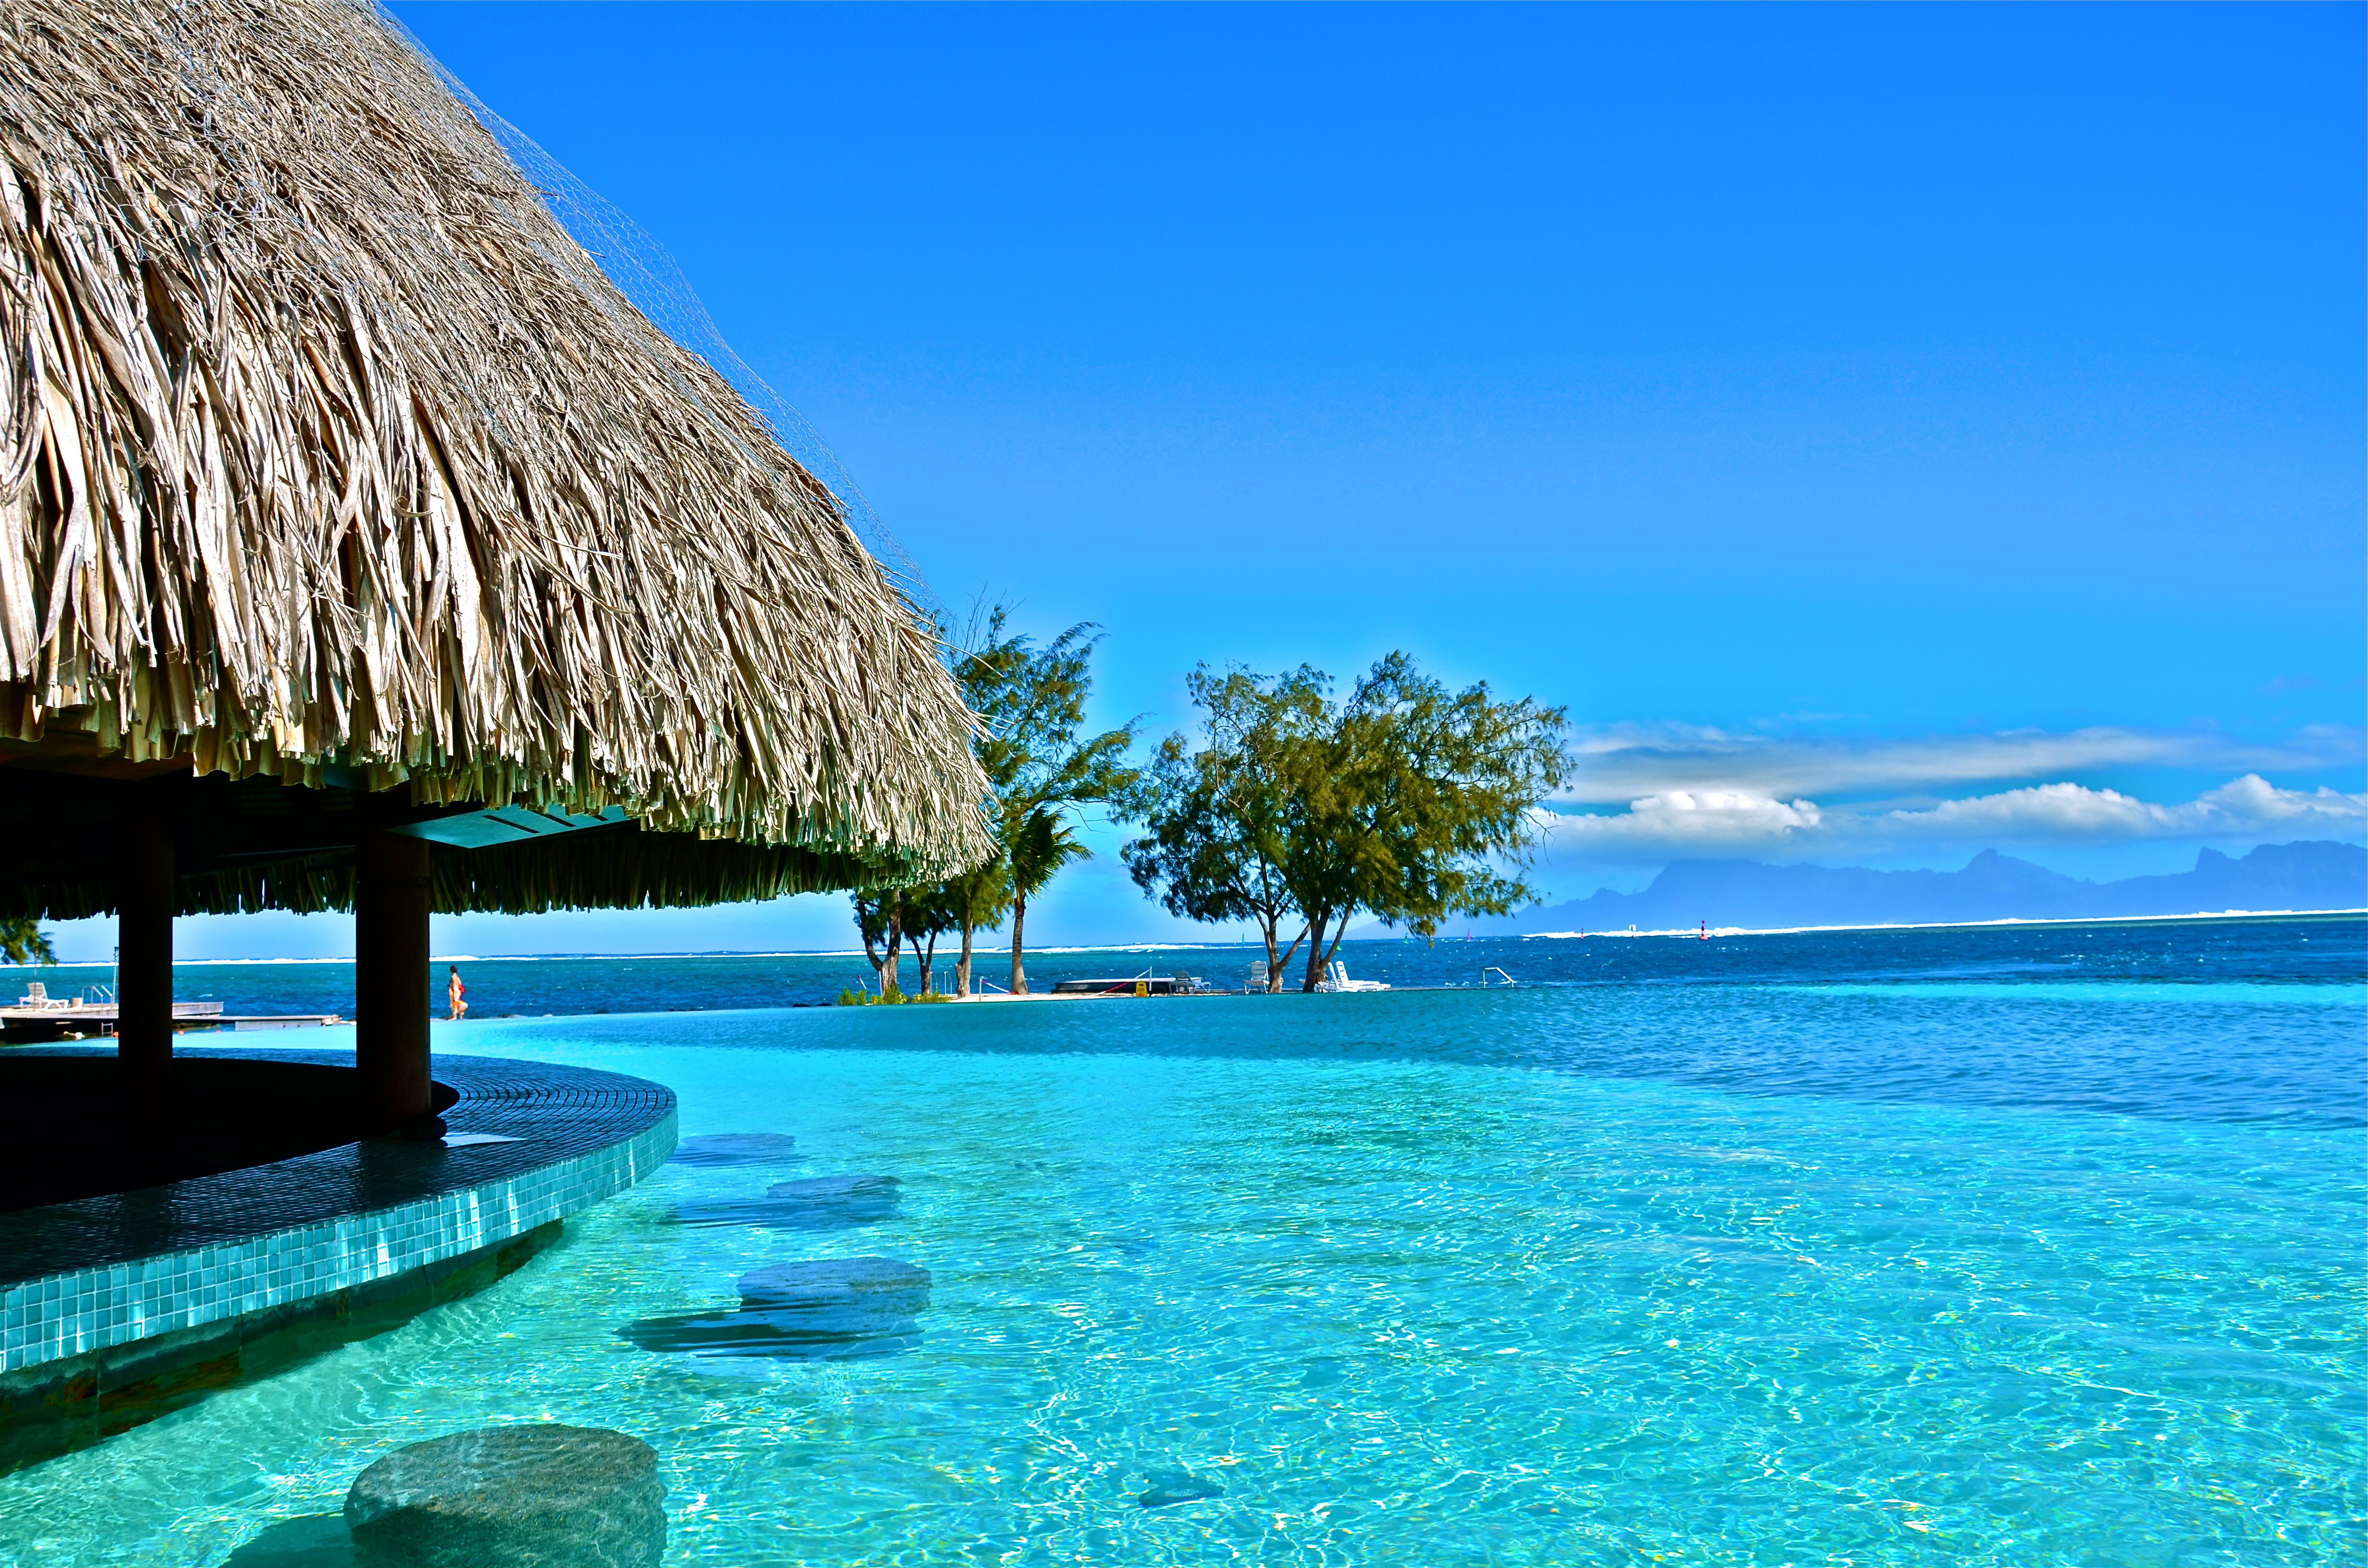 Tahiti Pool High Quality And Resolution Wallpaper On